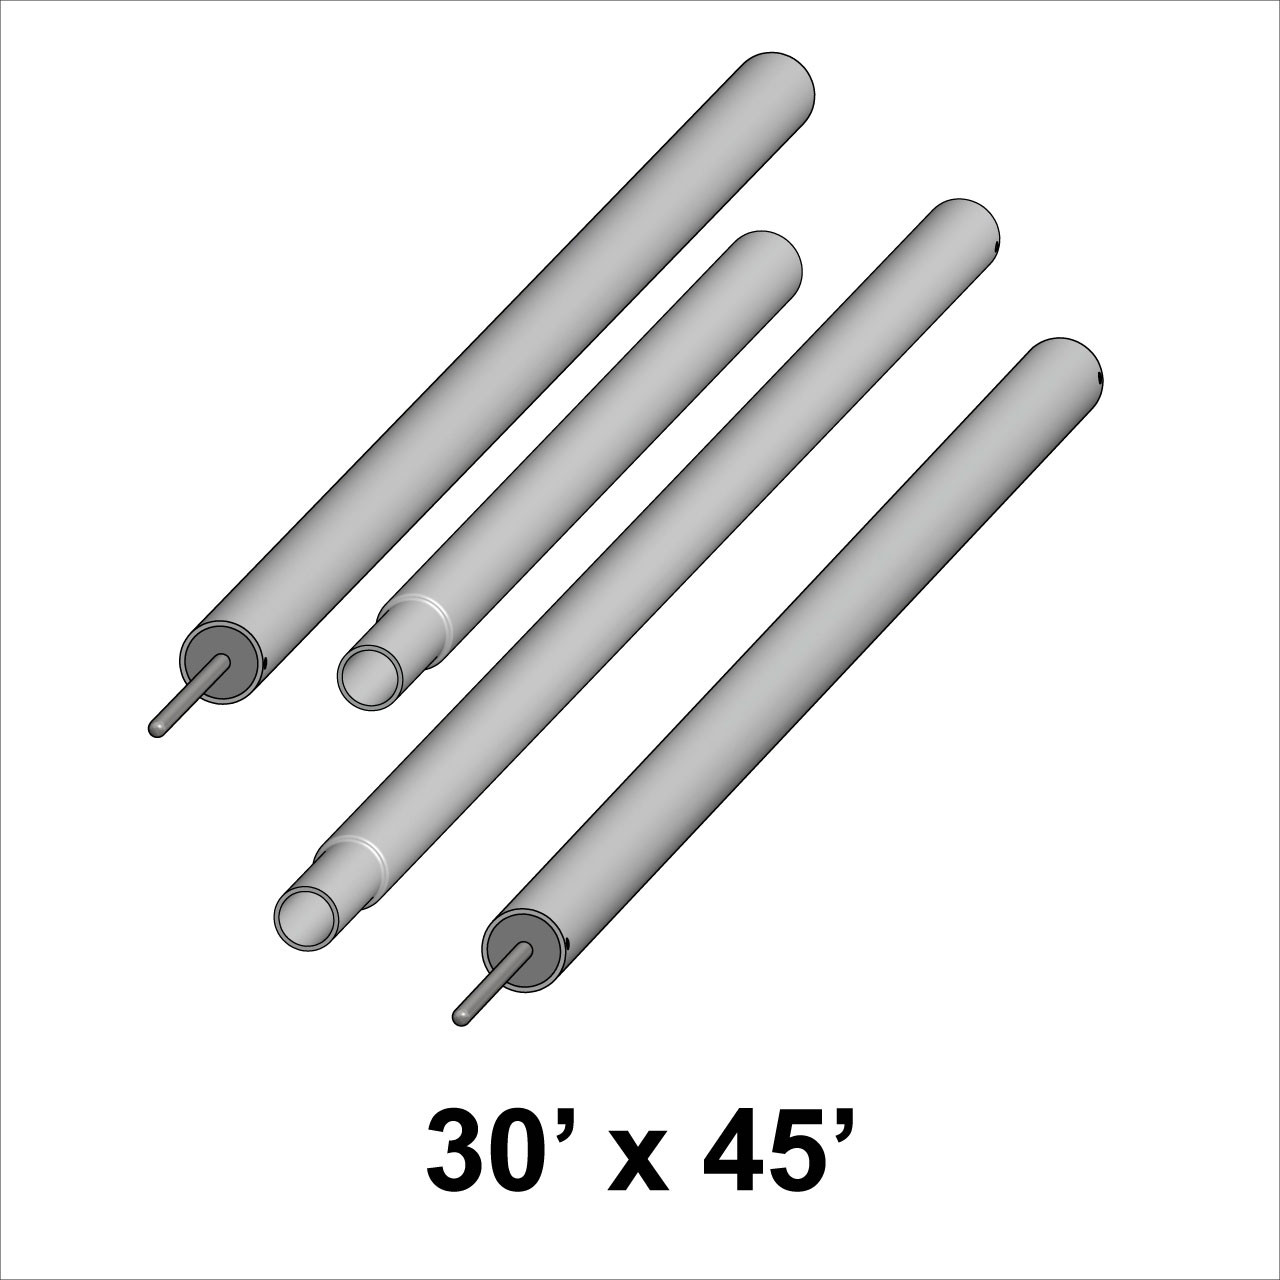 30' x 45' Classic Series Pole Kit